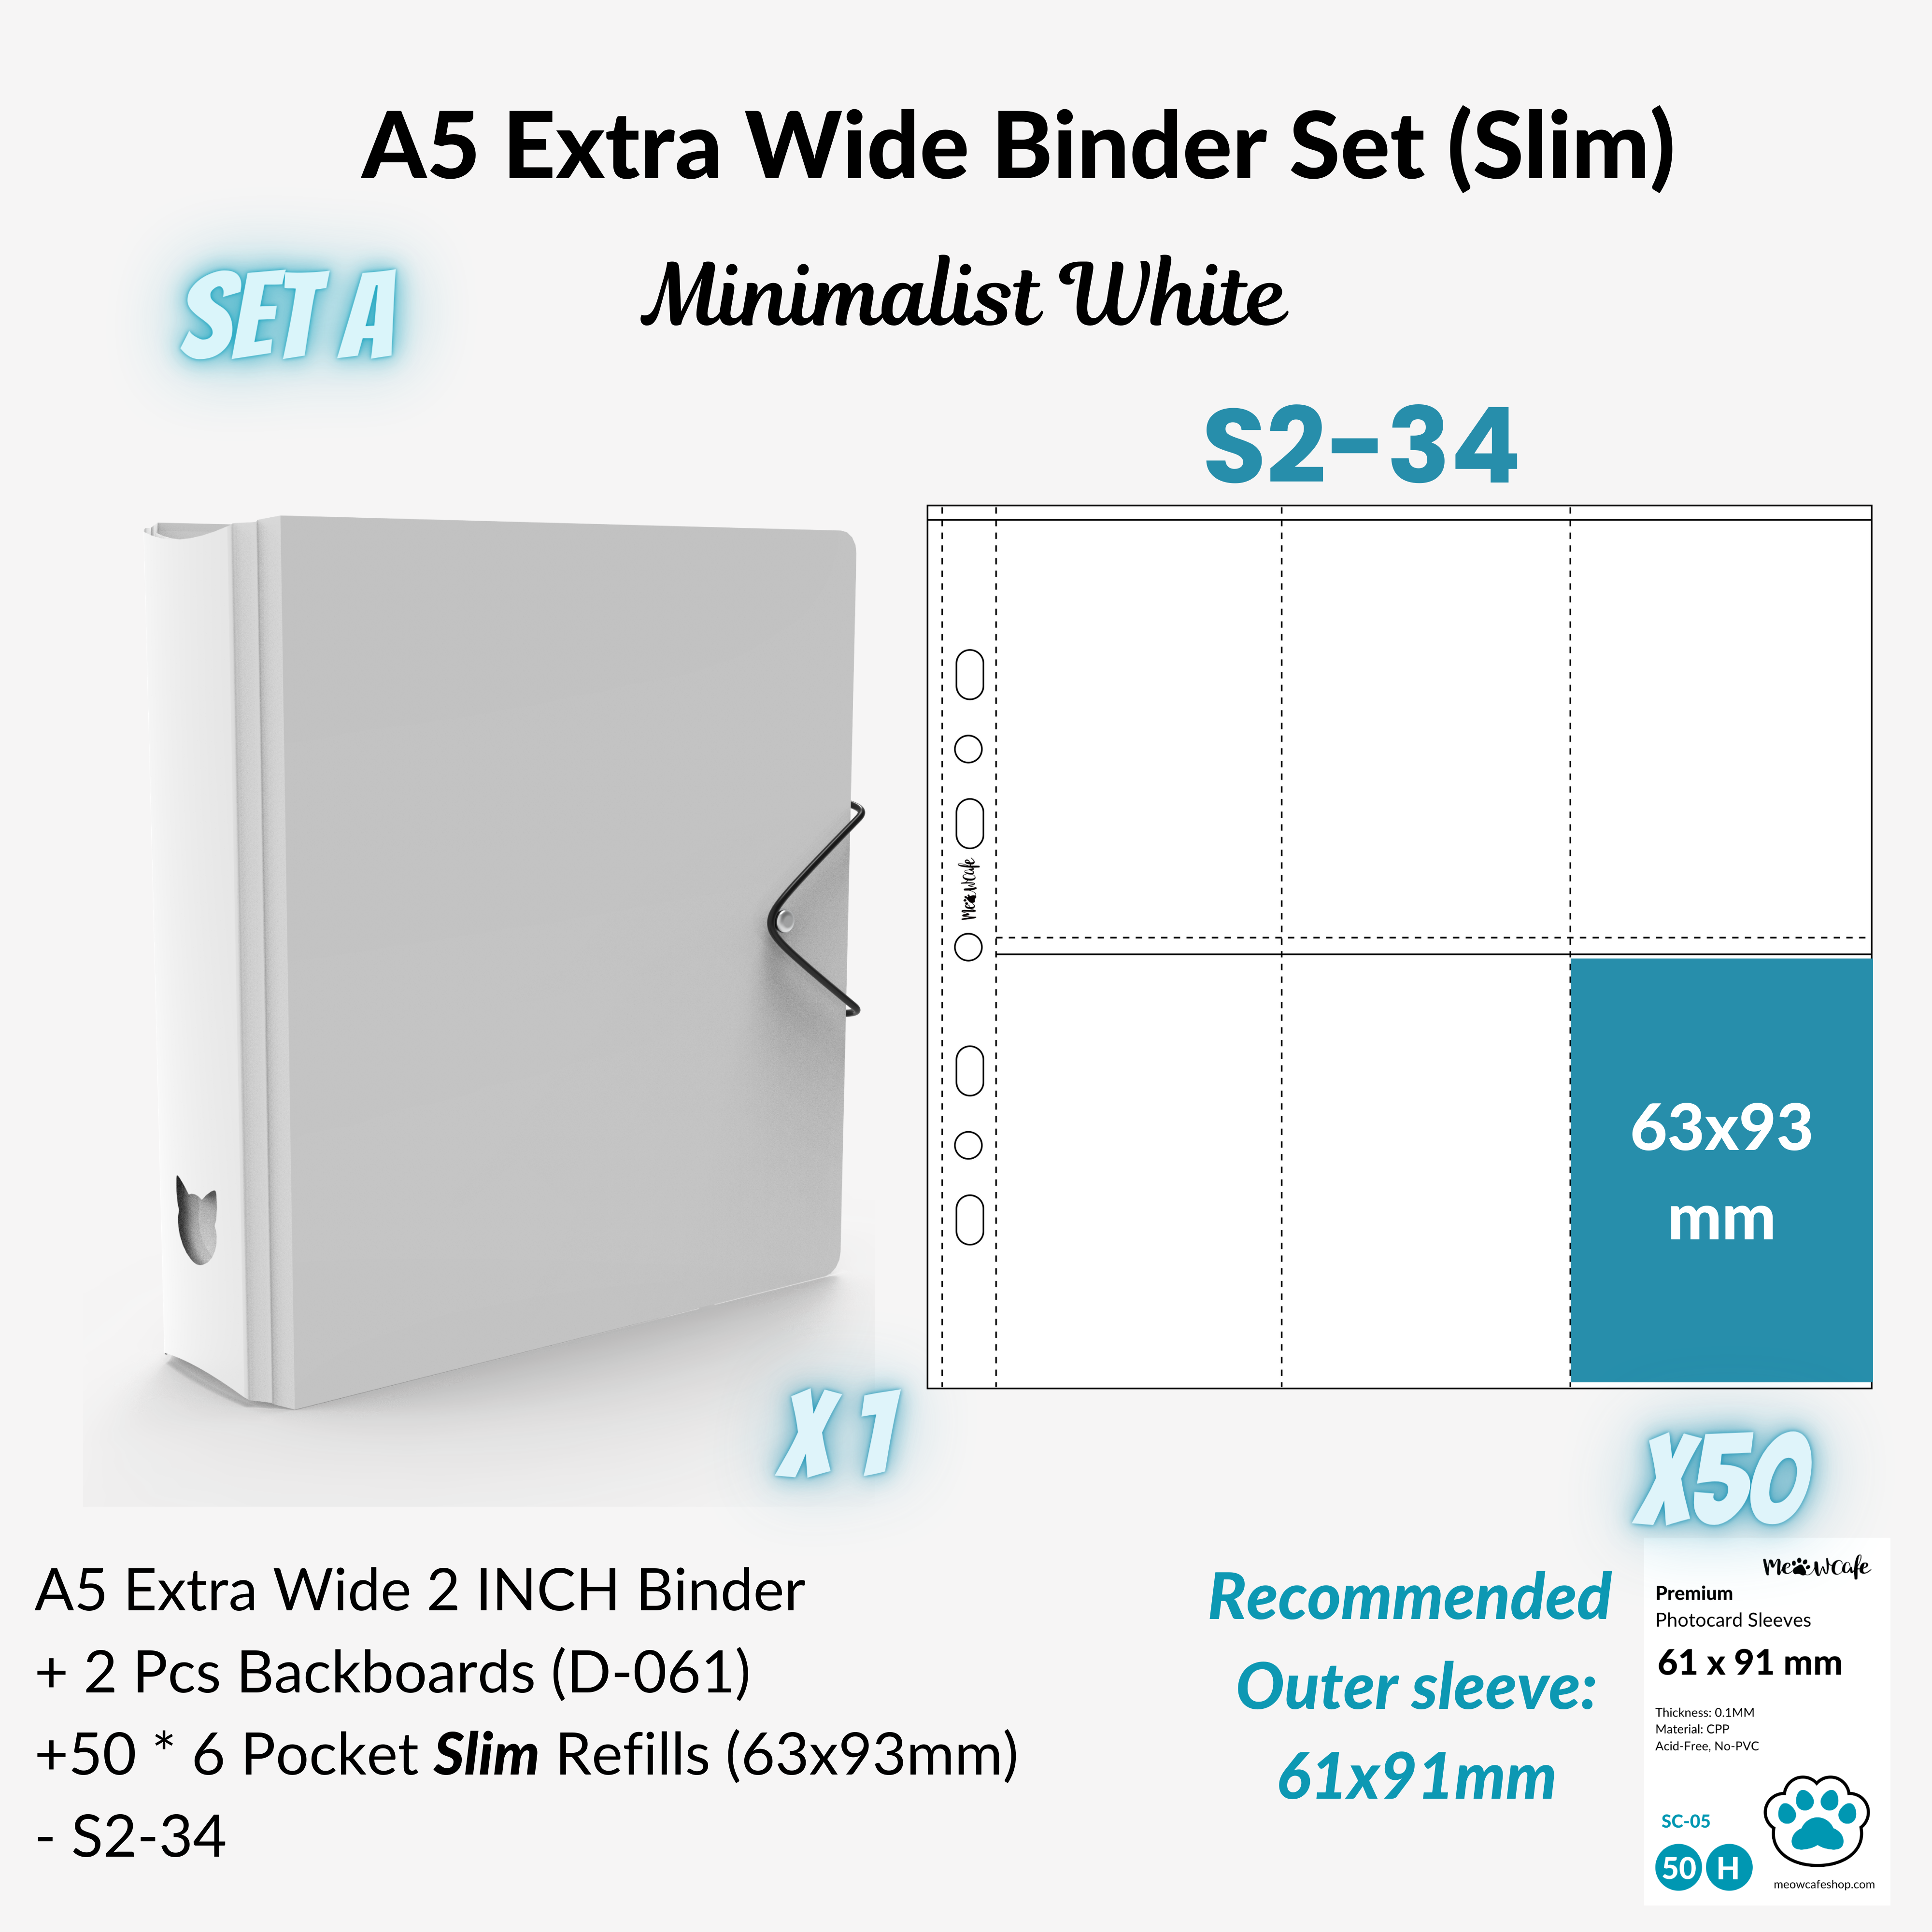 K-KEEP [A5 Extra-Wide] Binder [V1] - [2 inch] - [Minimalist Series]  "OT5/OT6" Collector Binder 6 Pocket Binder - Minimalist Series